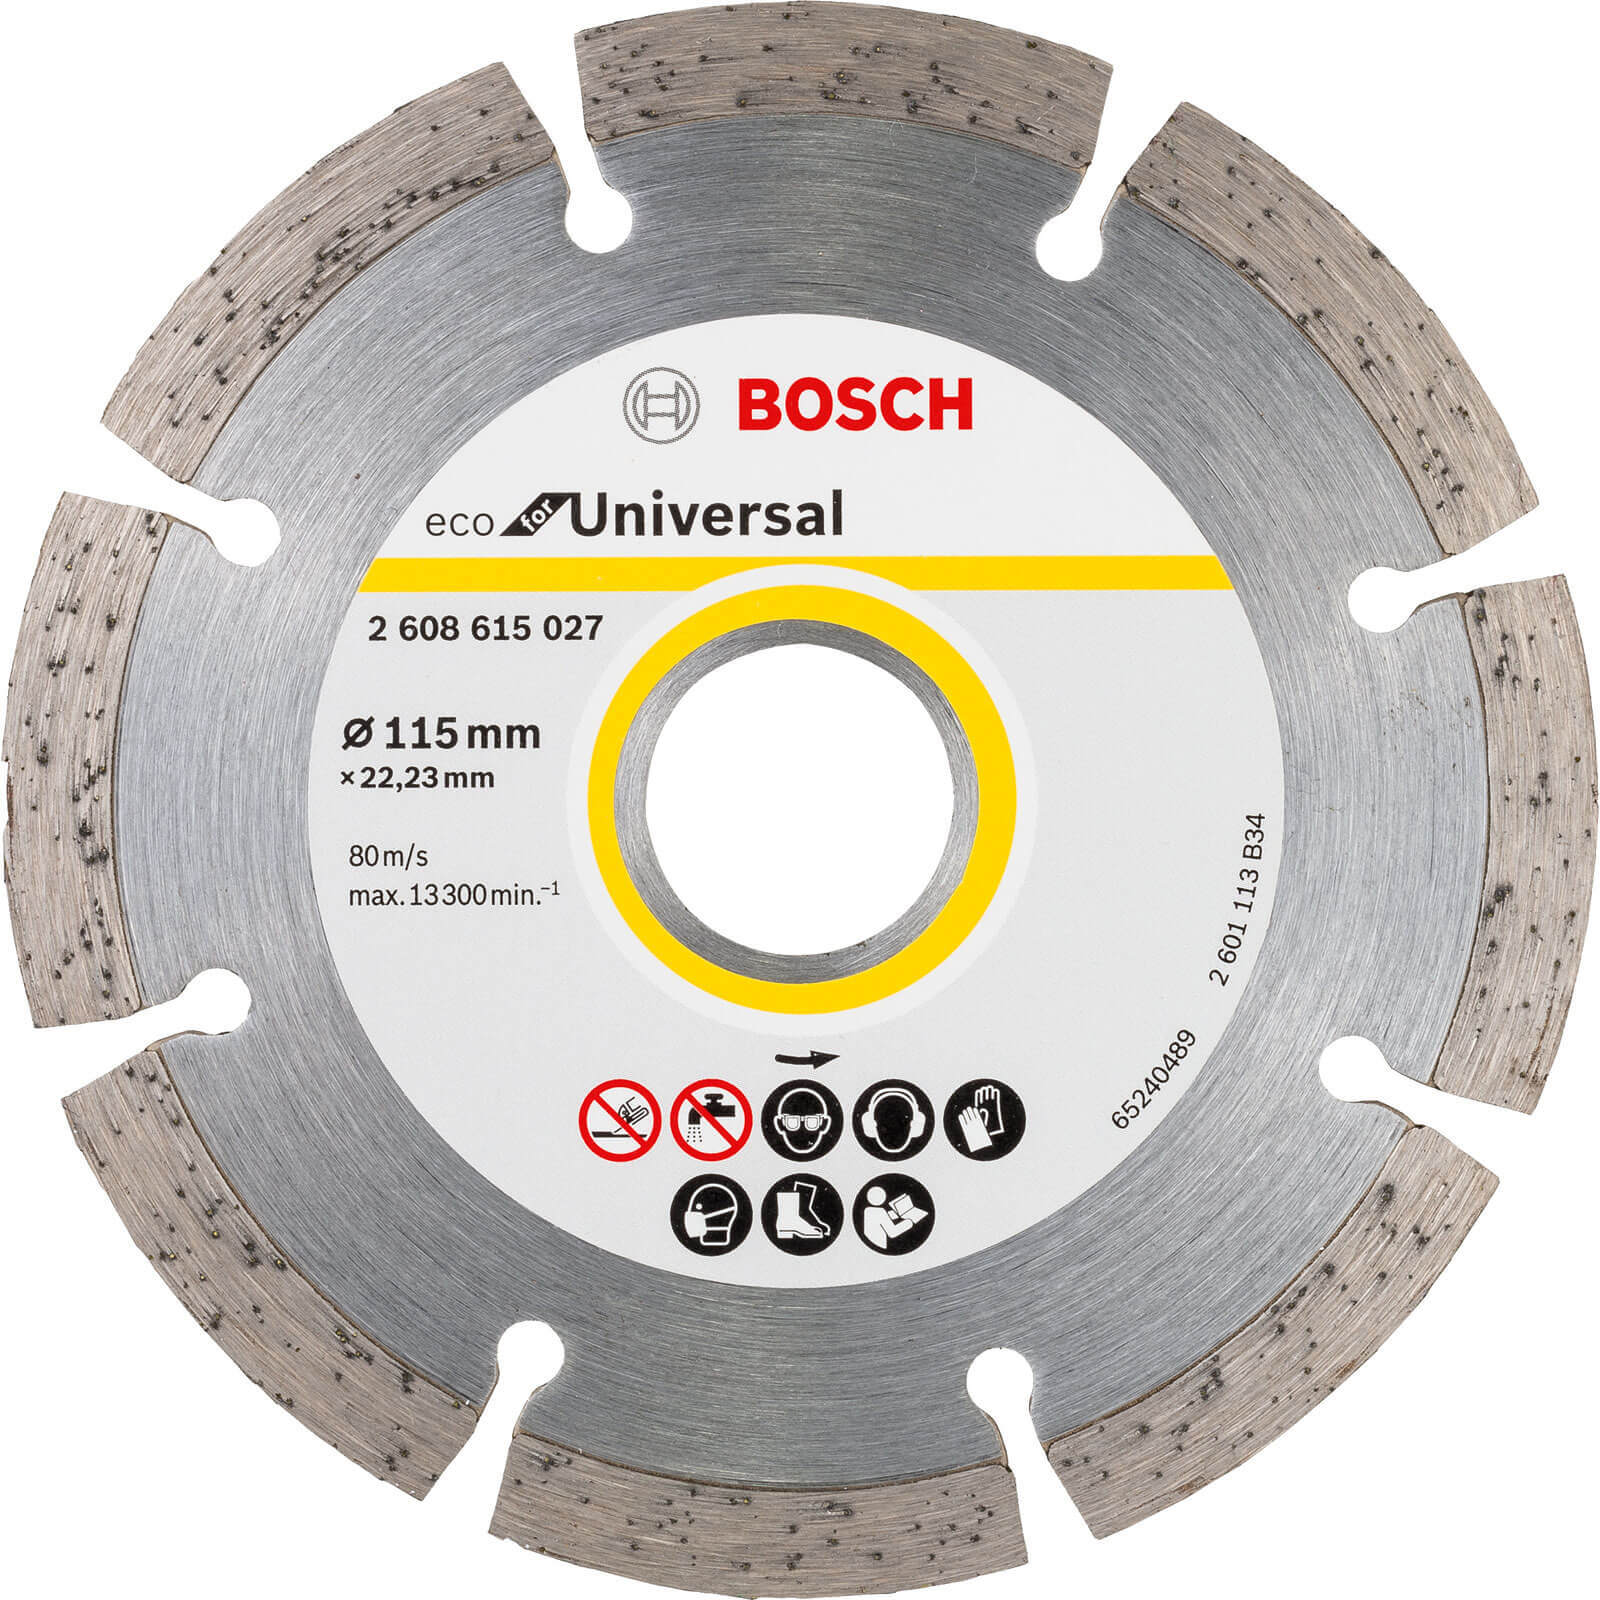 Photo of Bosch Eco Universal Segmented Diamond Cutting Disc 115mm 2mm 22mm